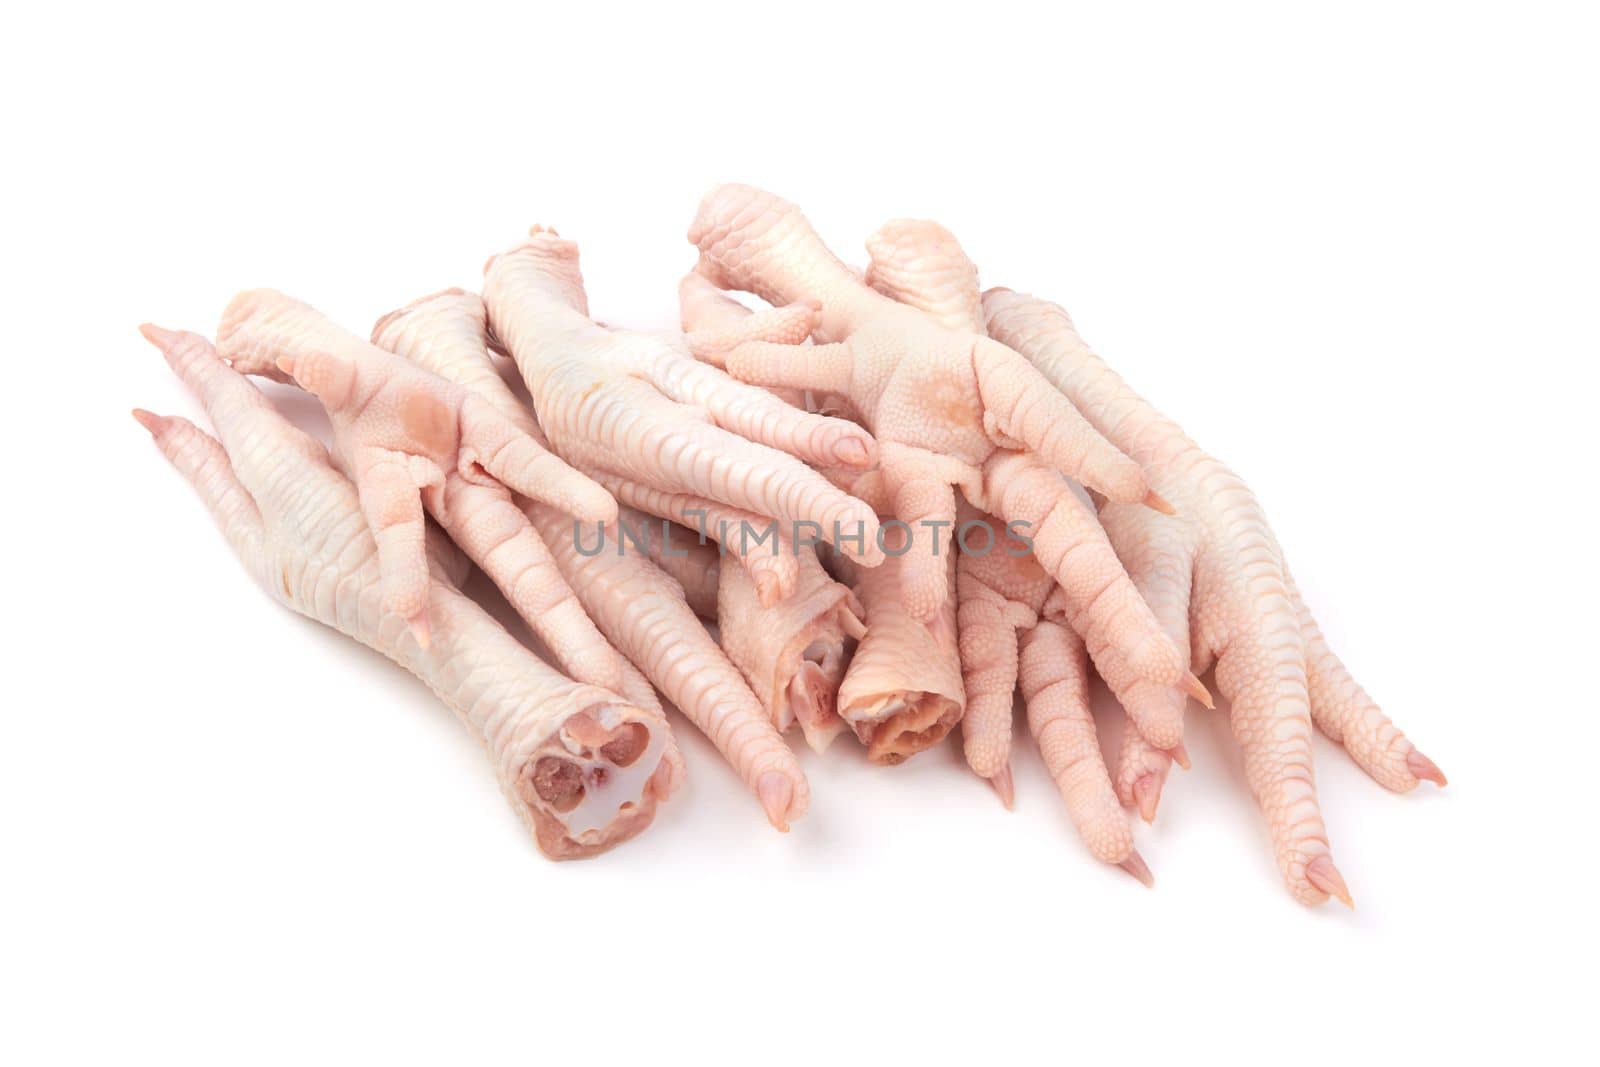 Raw chicken feet by pioneer111